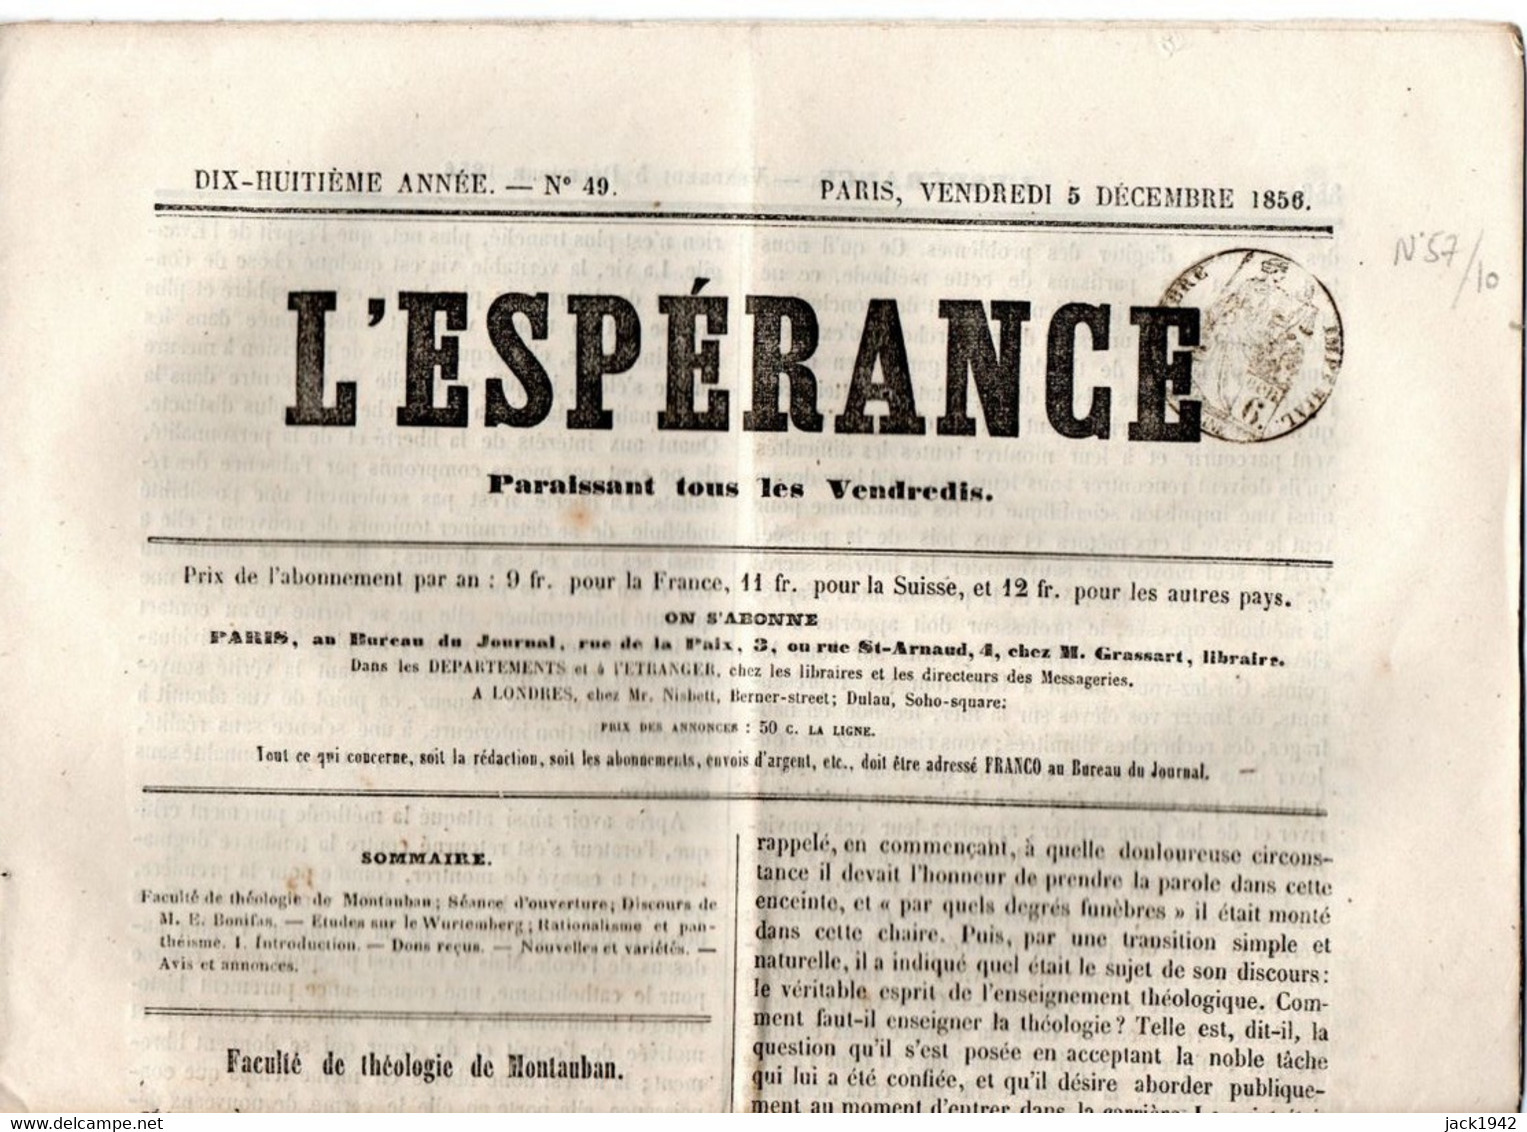 Journal L'Espérance Du 5 Décembre 1856, Avec Timbre Humide " Timbre / Impérial 6 Centimes" - Zeitungsmarken (Streifbänder)